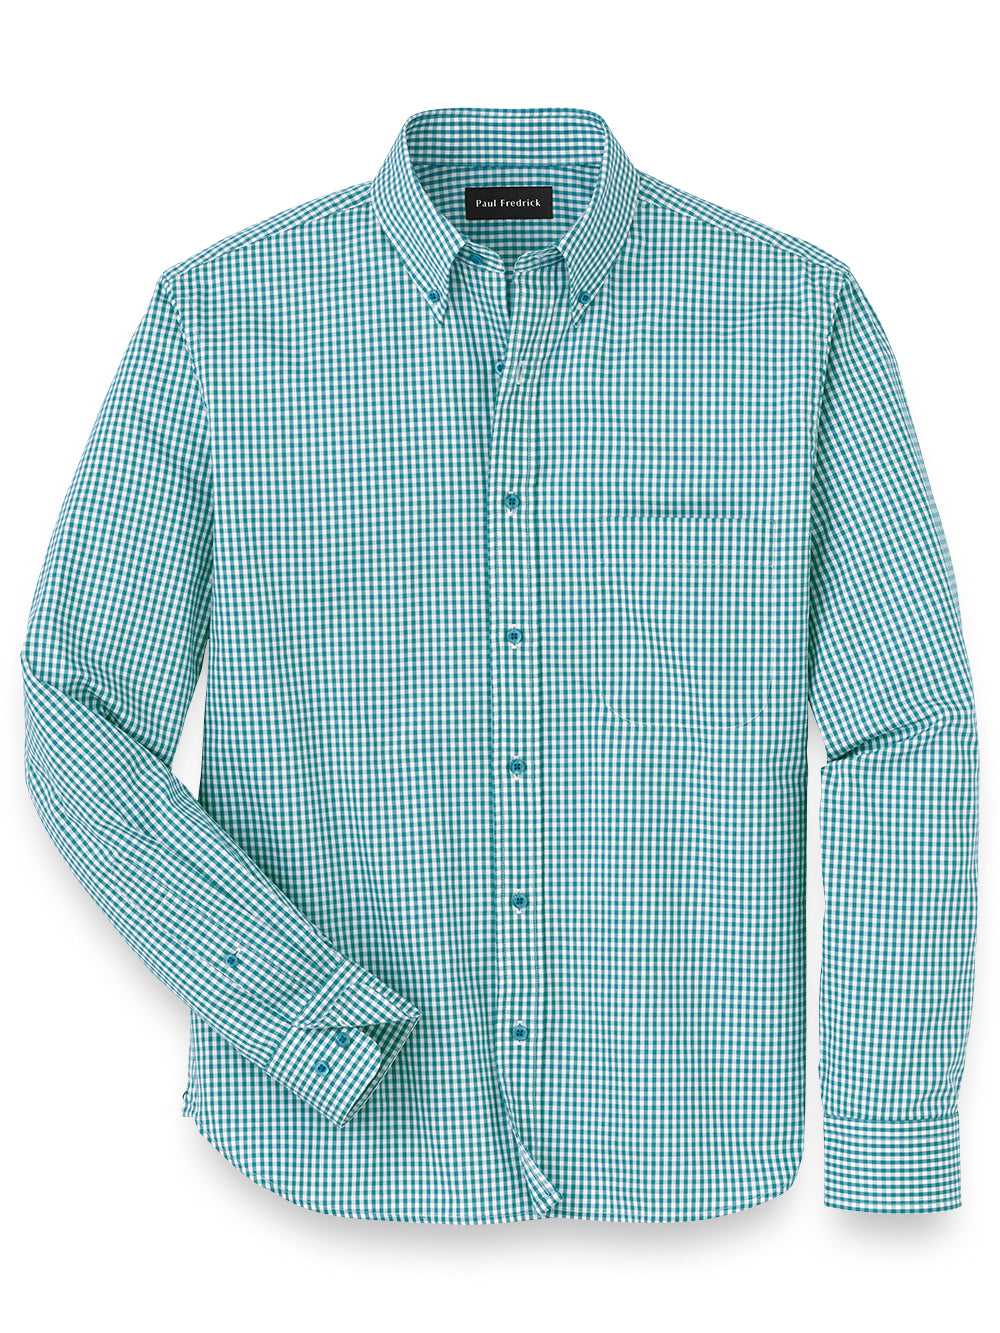 Paul Fredrick, Cotton Gingham Casual Shirt